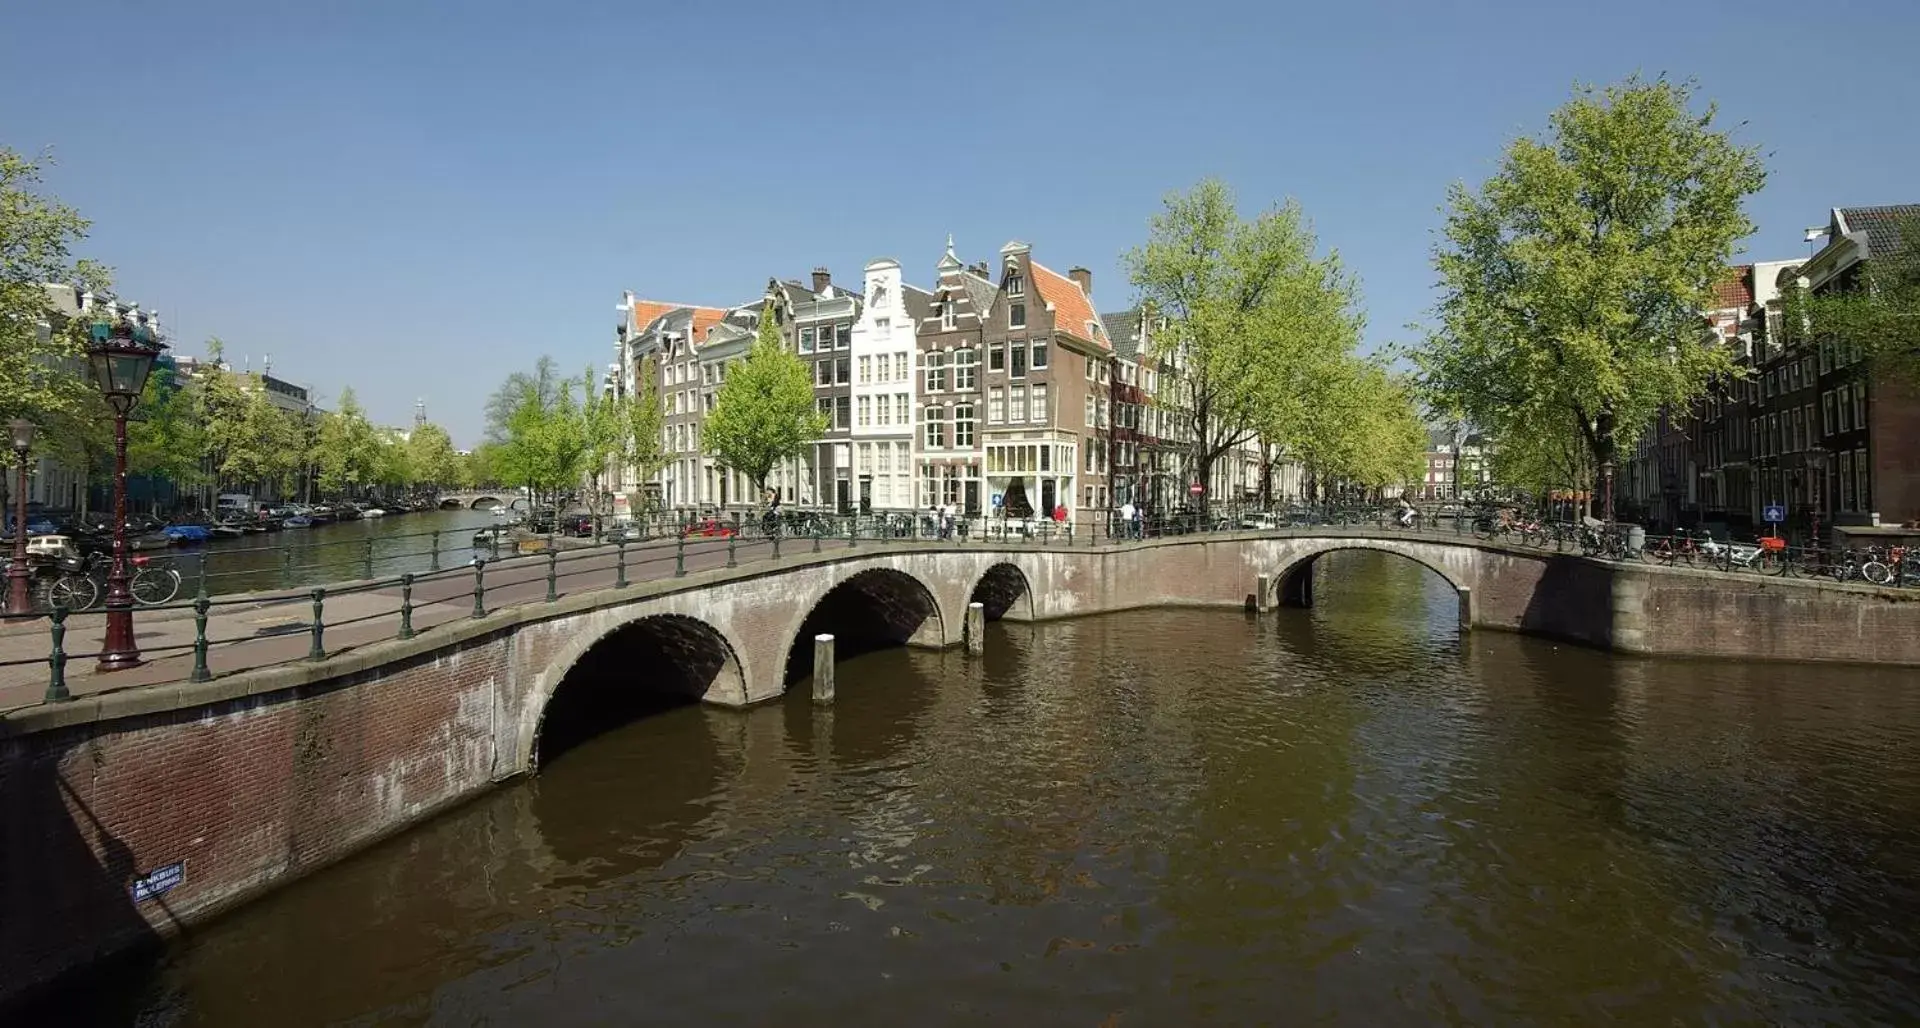 Milkhouse Luxury Stay Amsterdam